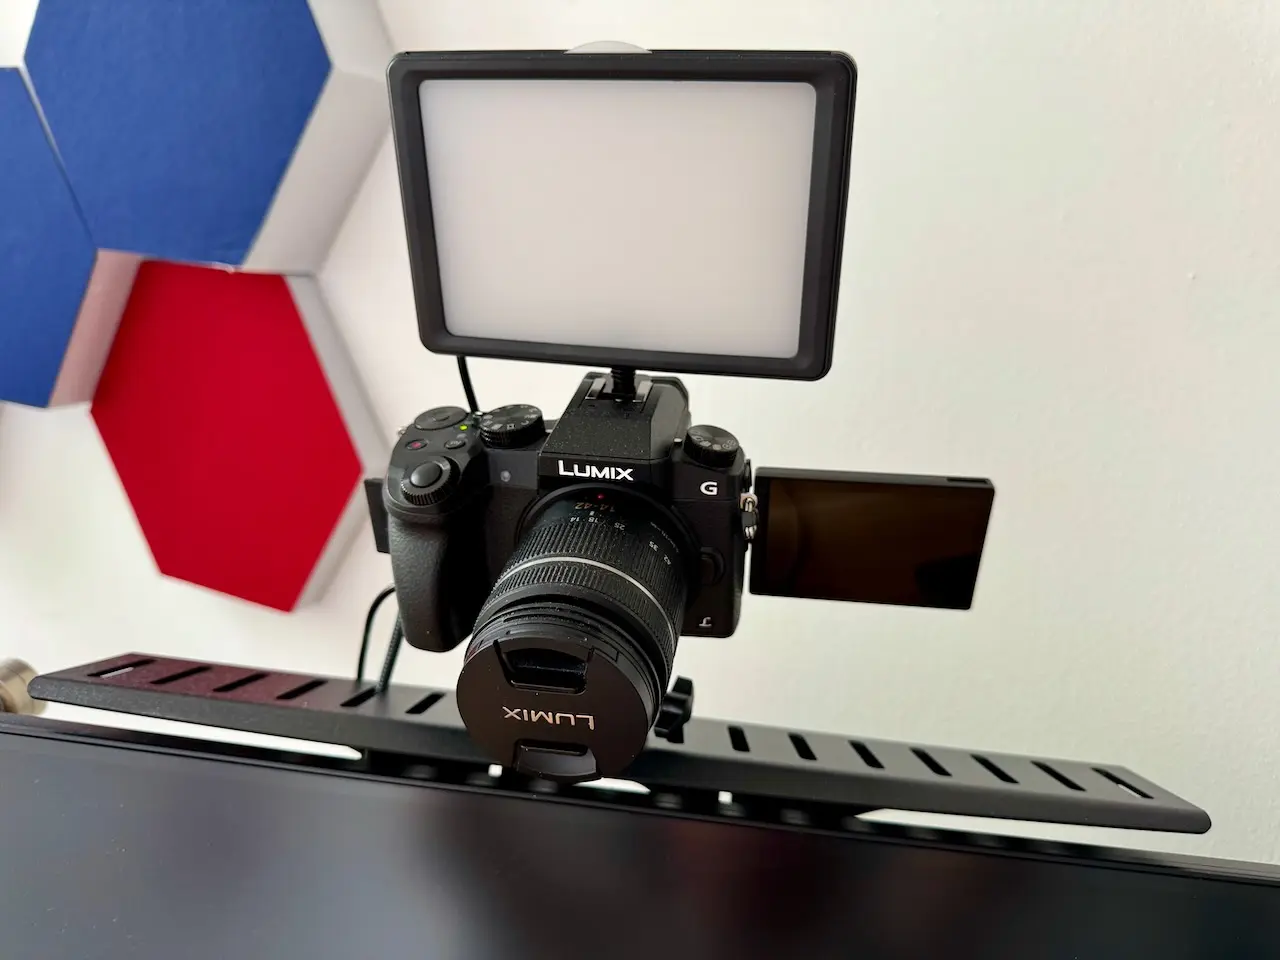 An image of a Lumix G7 on a VESA mount and an LED light